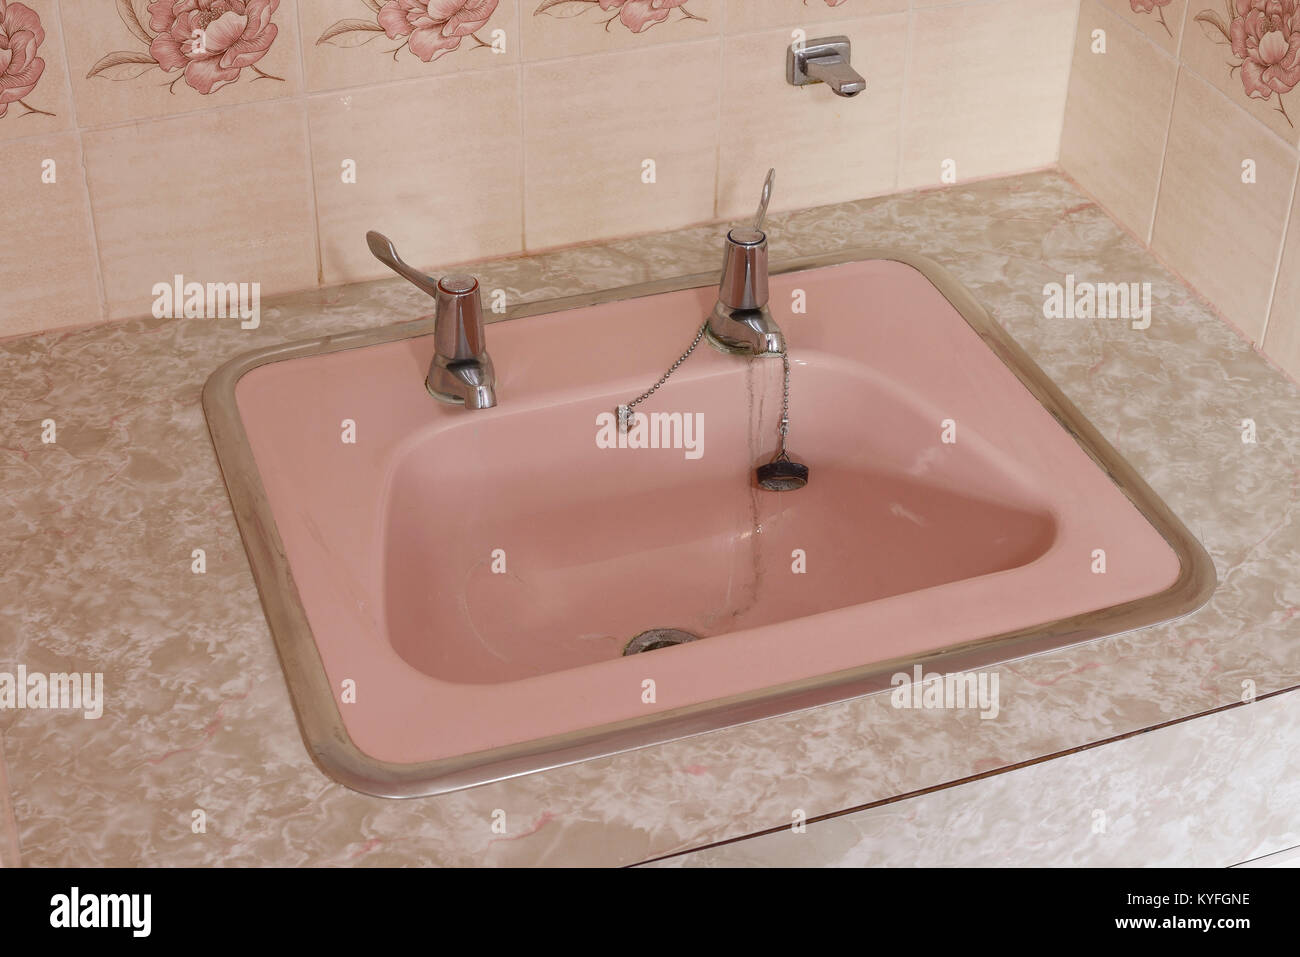 Domestic vanity unit hand basin in coral pink ceramic Stock Photo